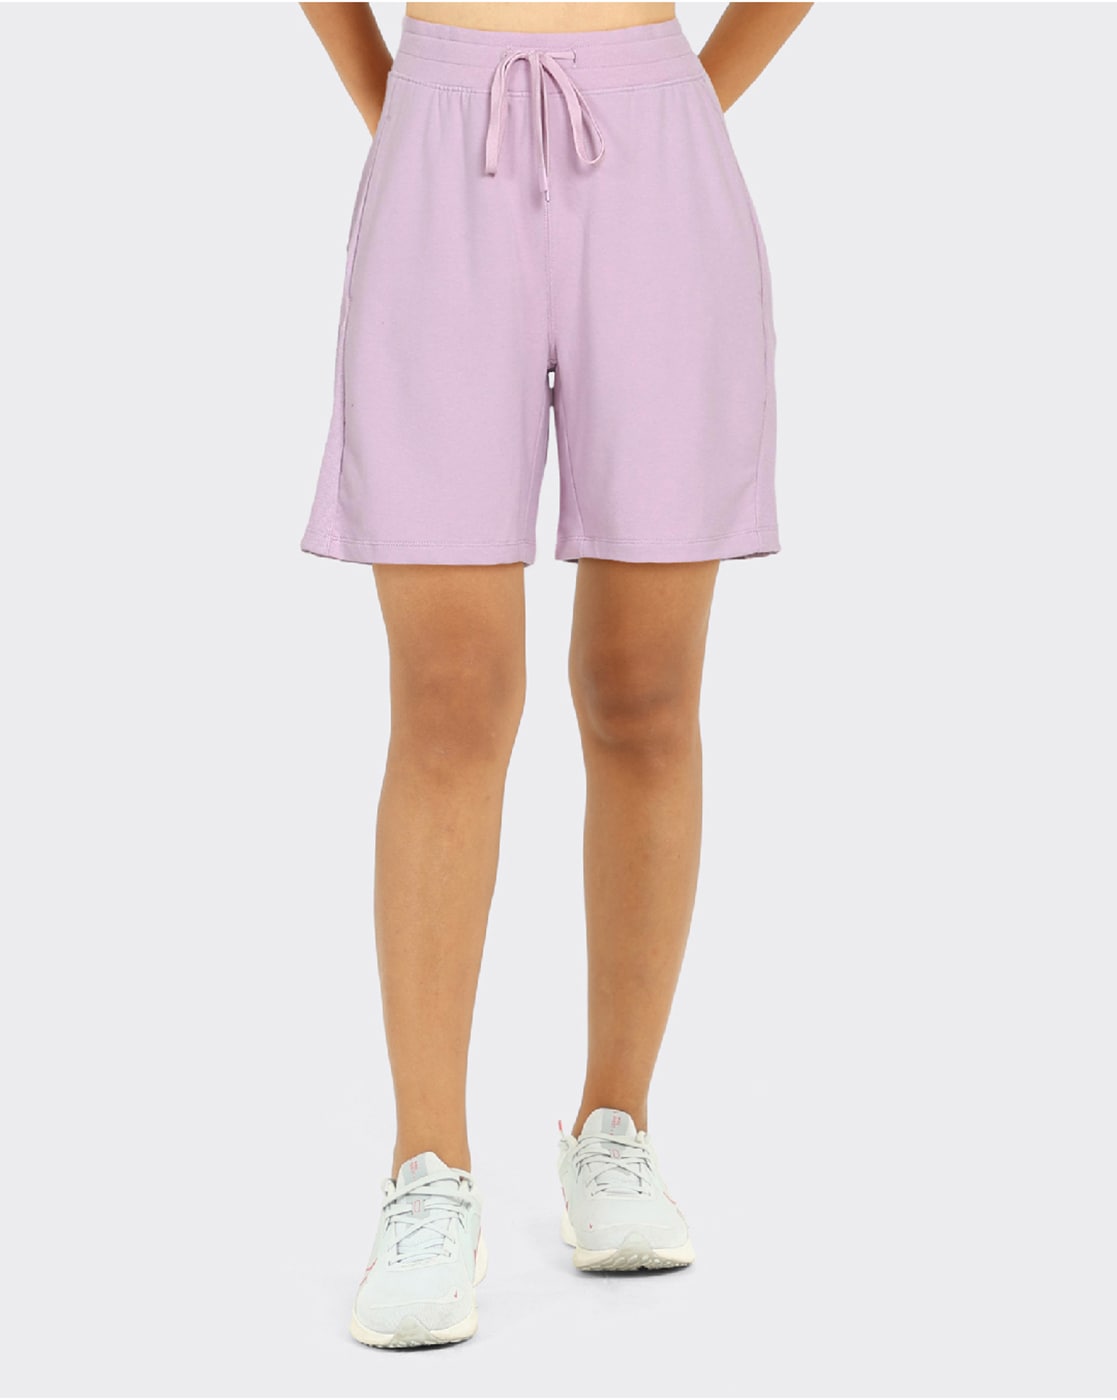 Buy Lavender Shorts for Women by BLISSCLUB Online